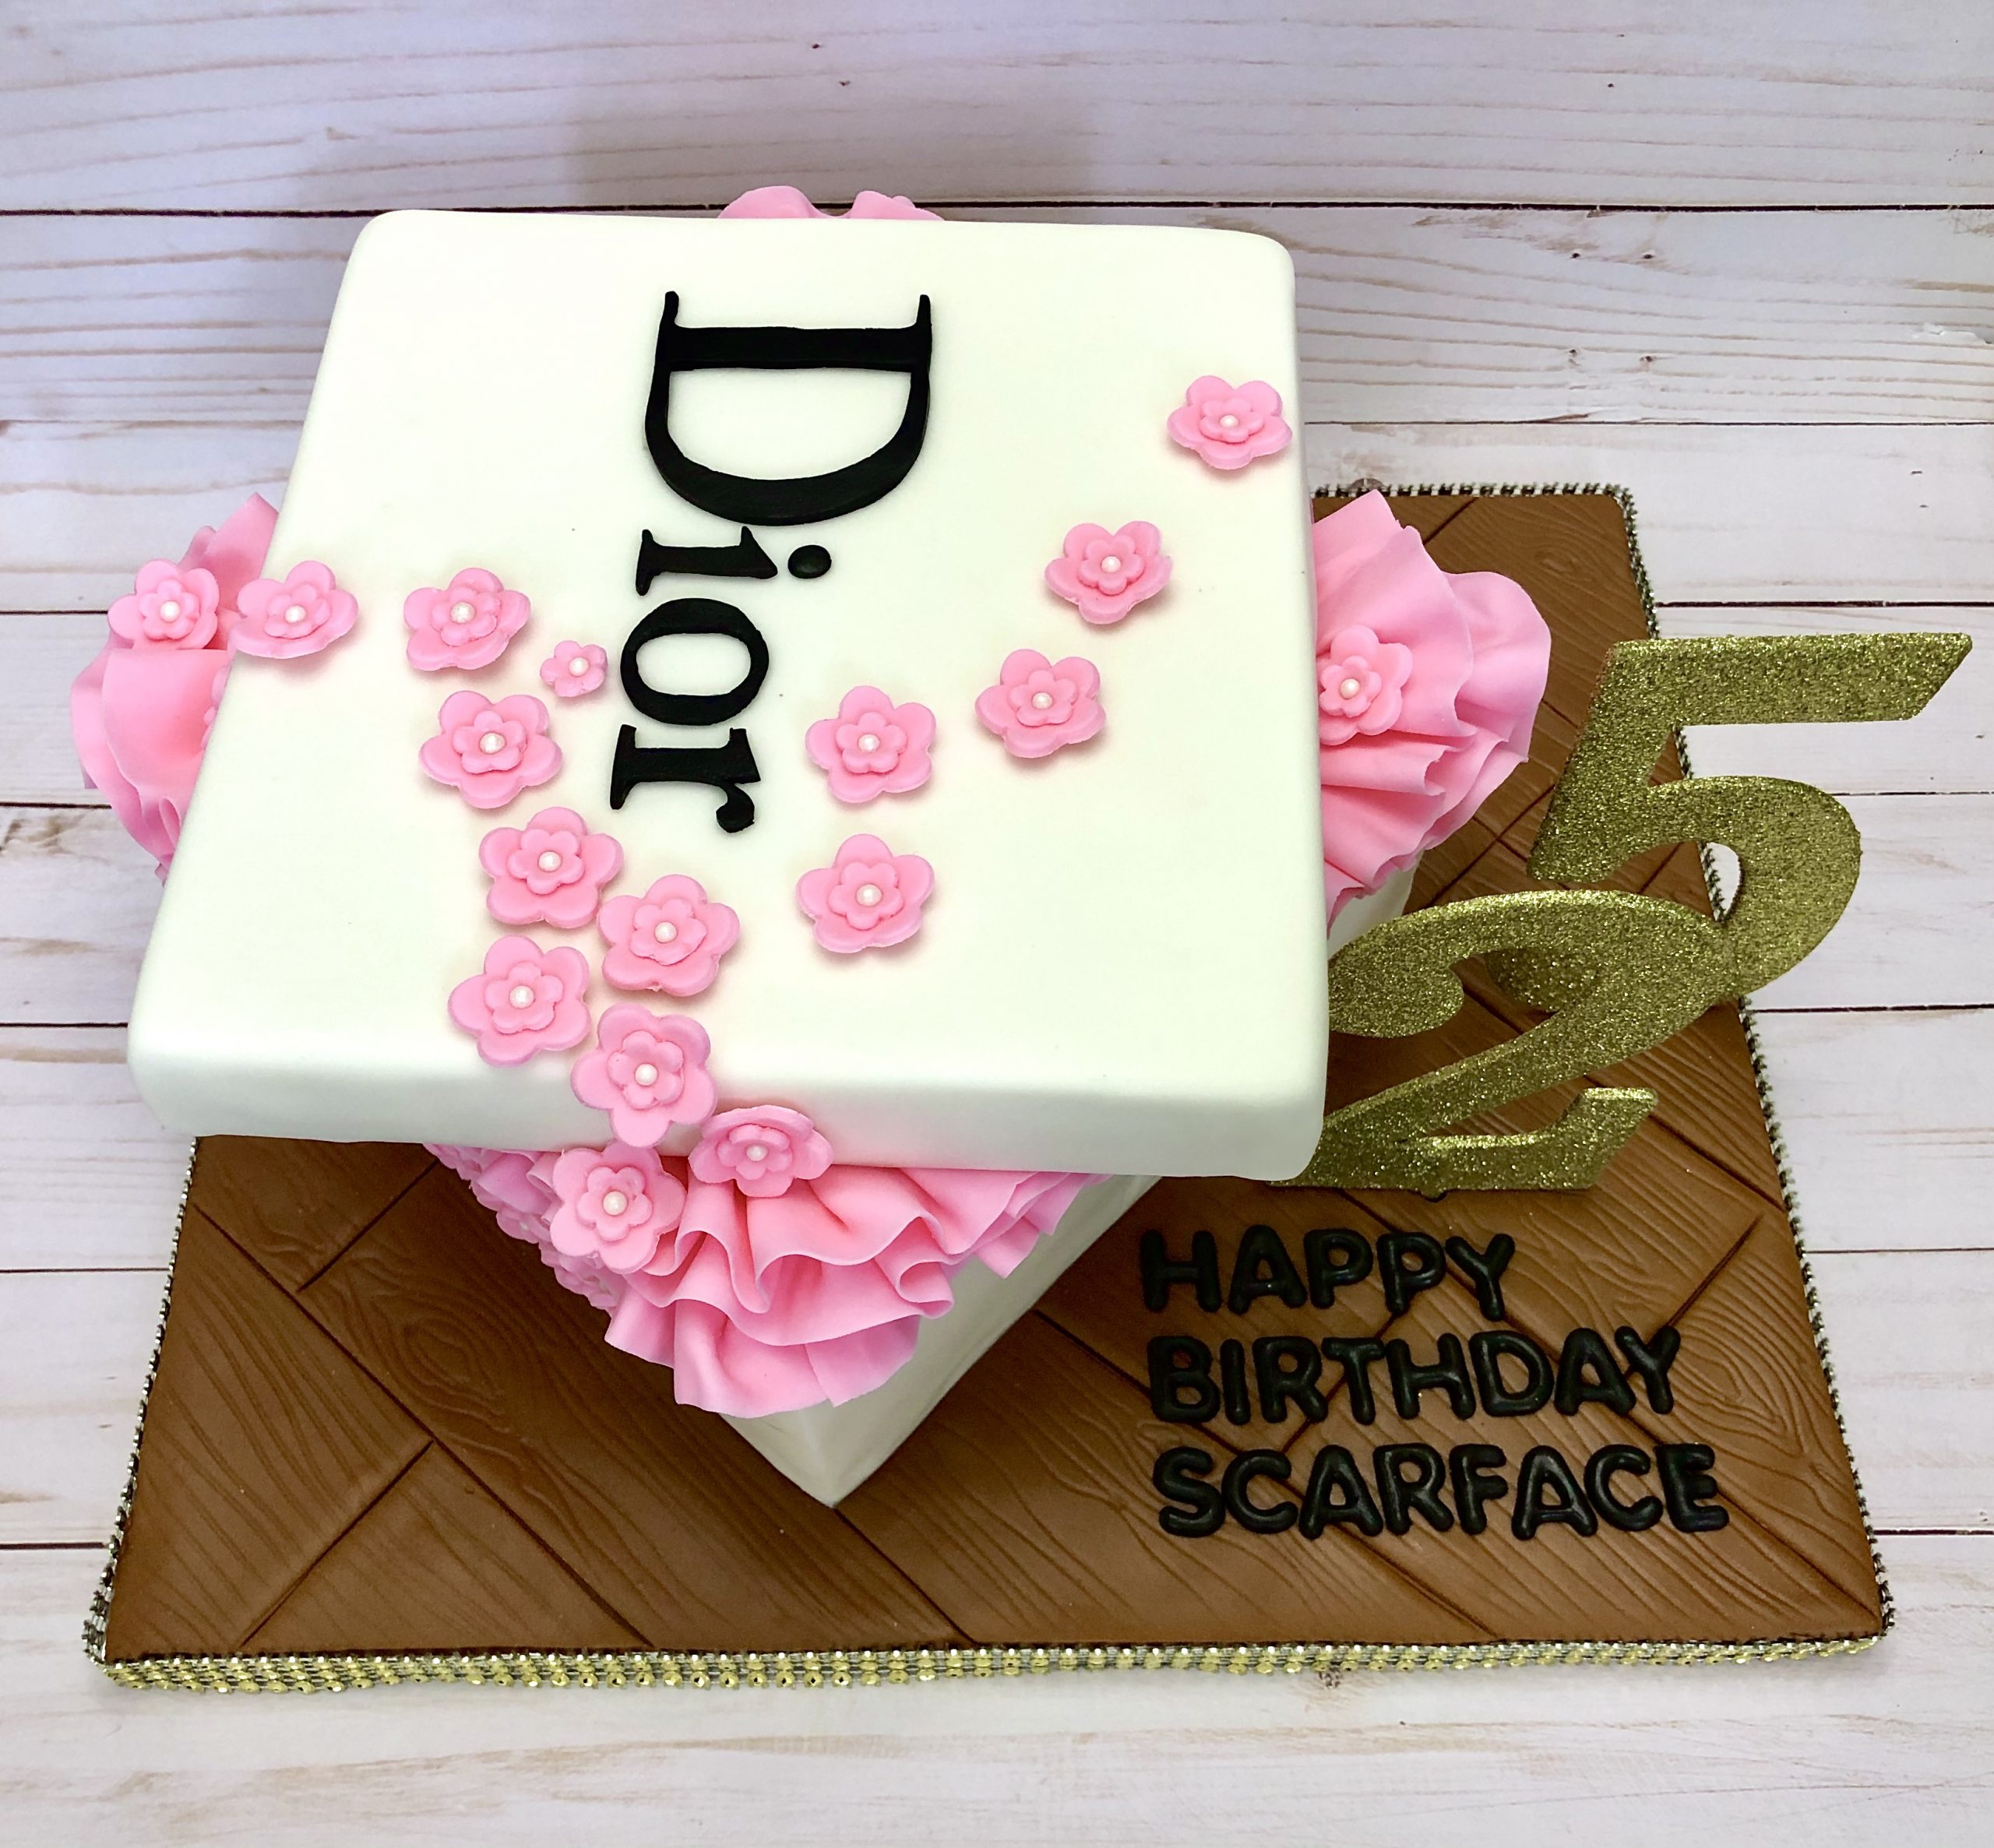 A Step by Step guide to make a Dior Box Cake